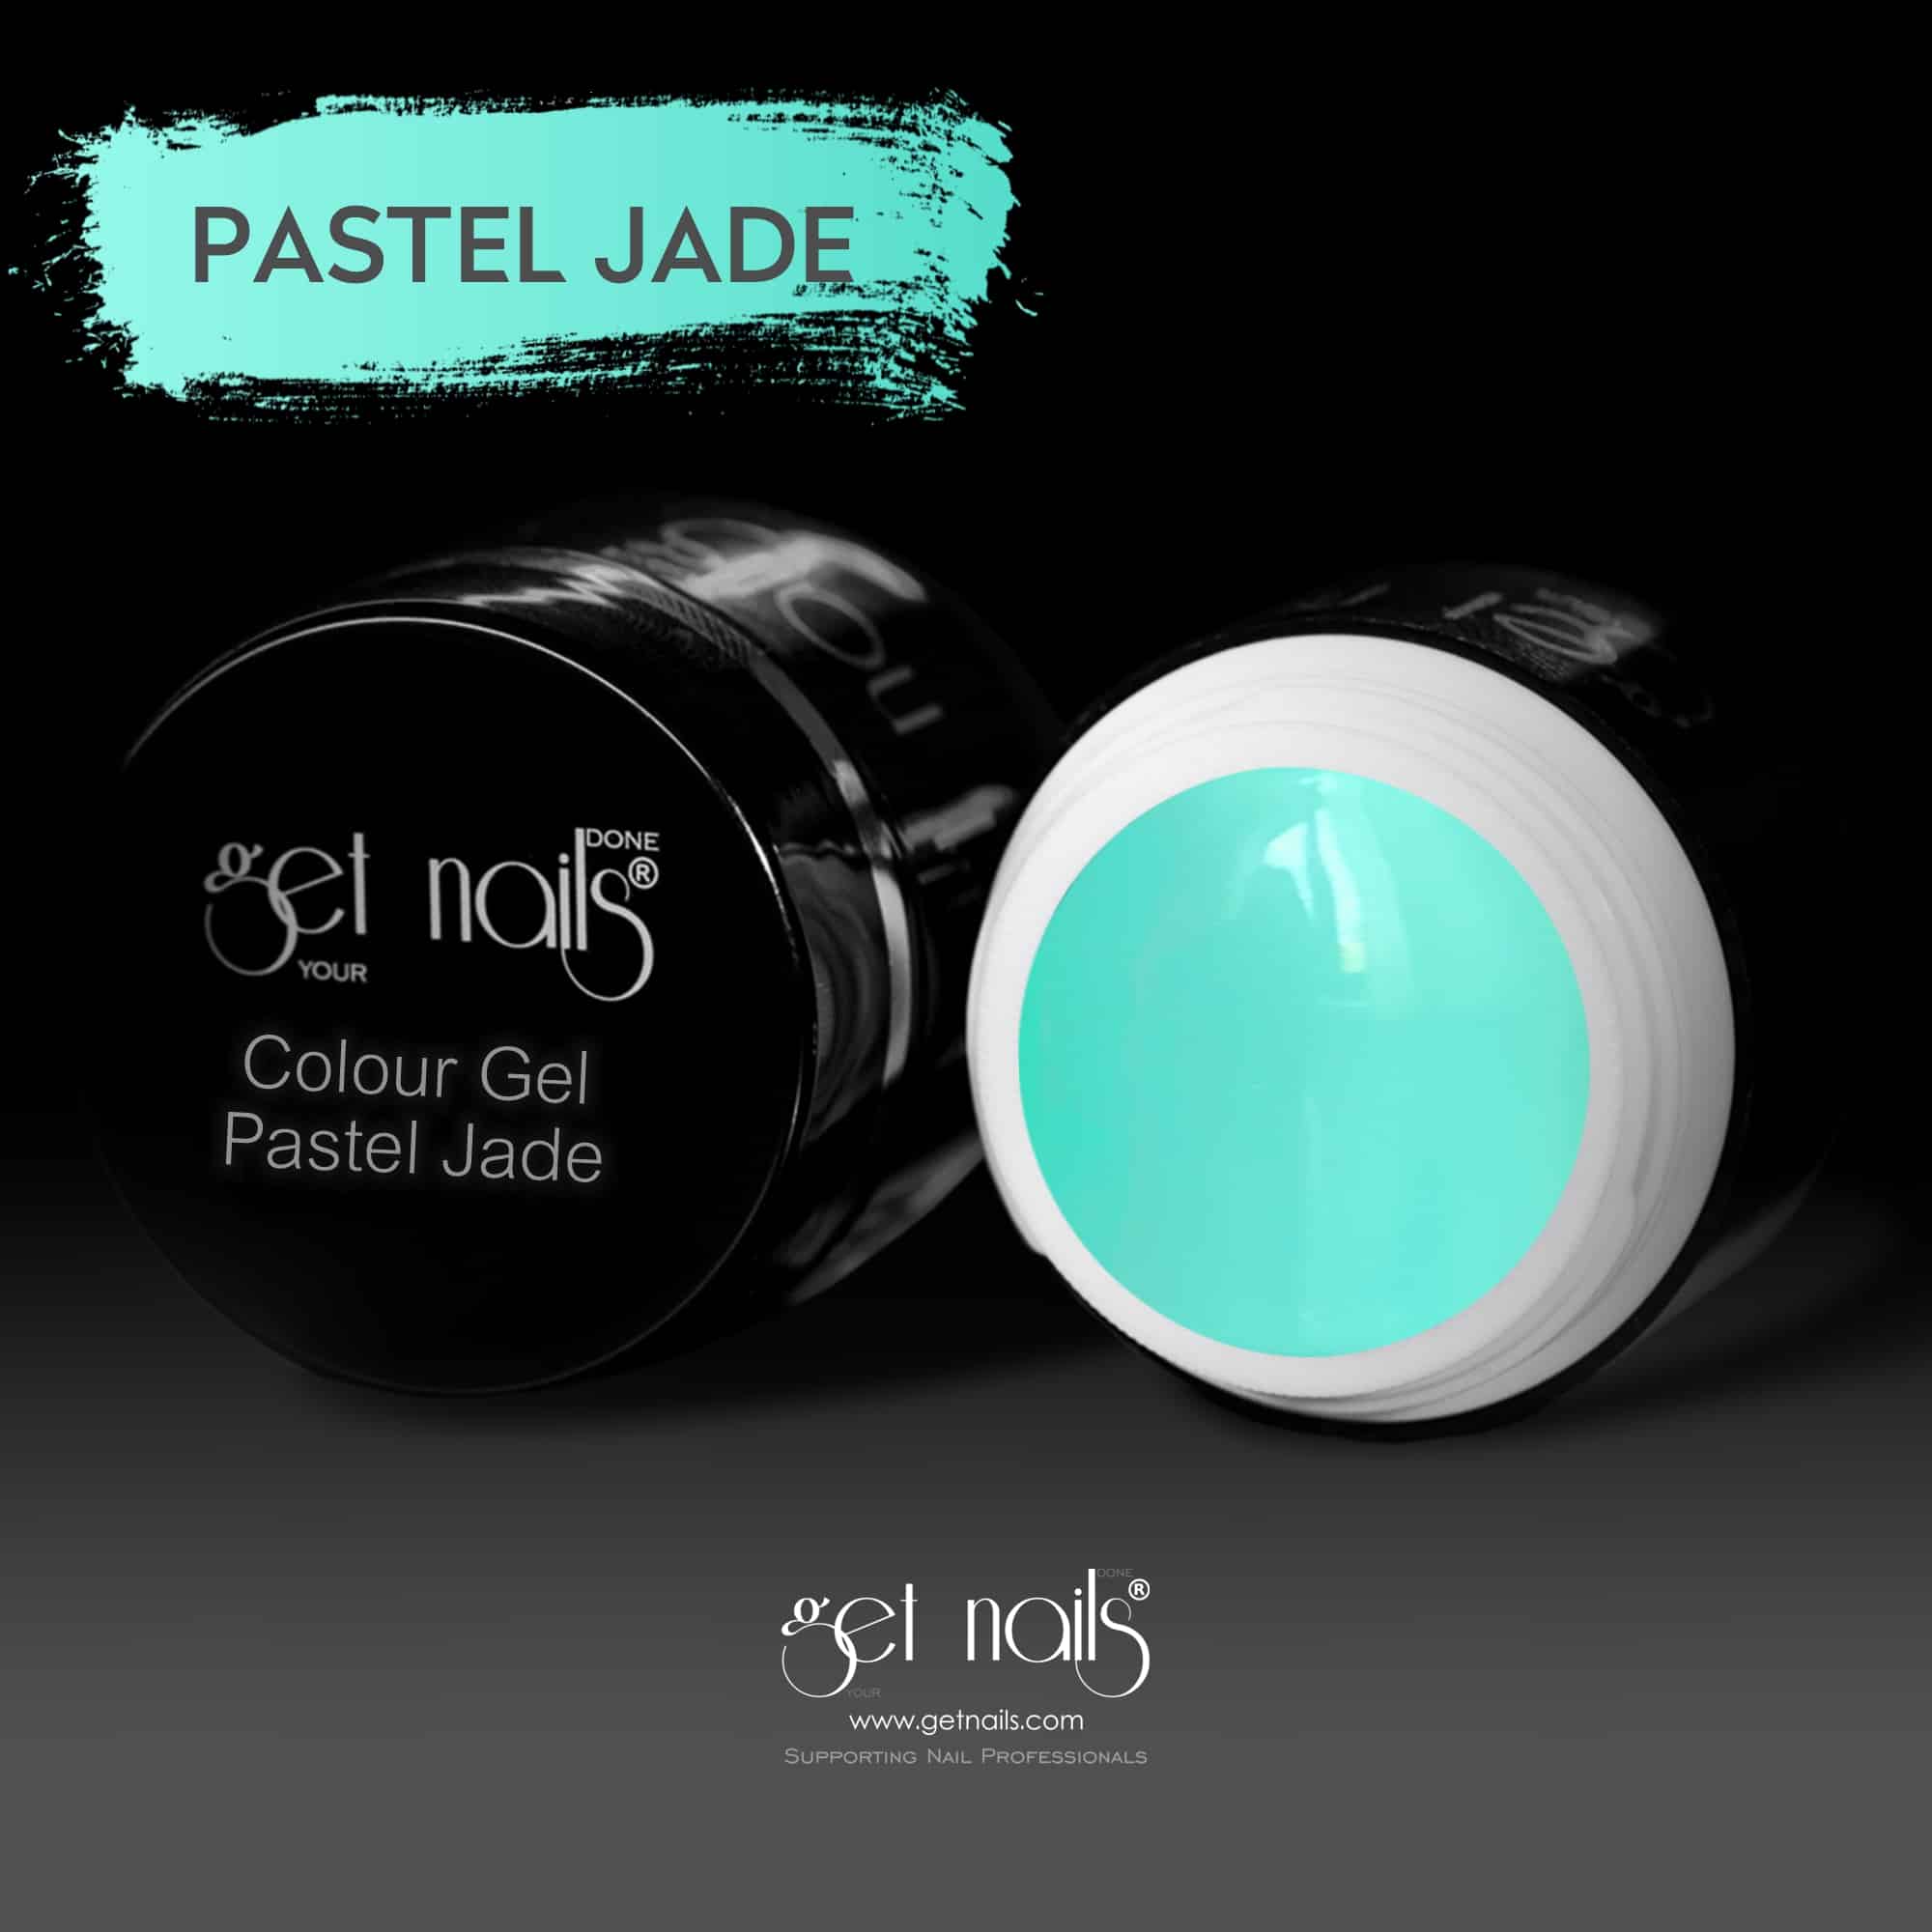 Get Nails Austria - Цветной гель Pastel Jade 5g